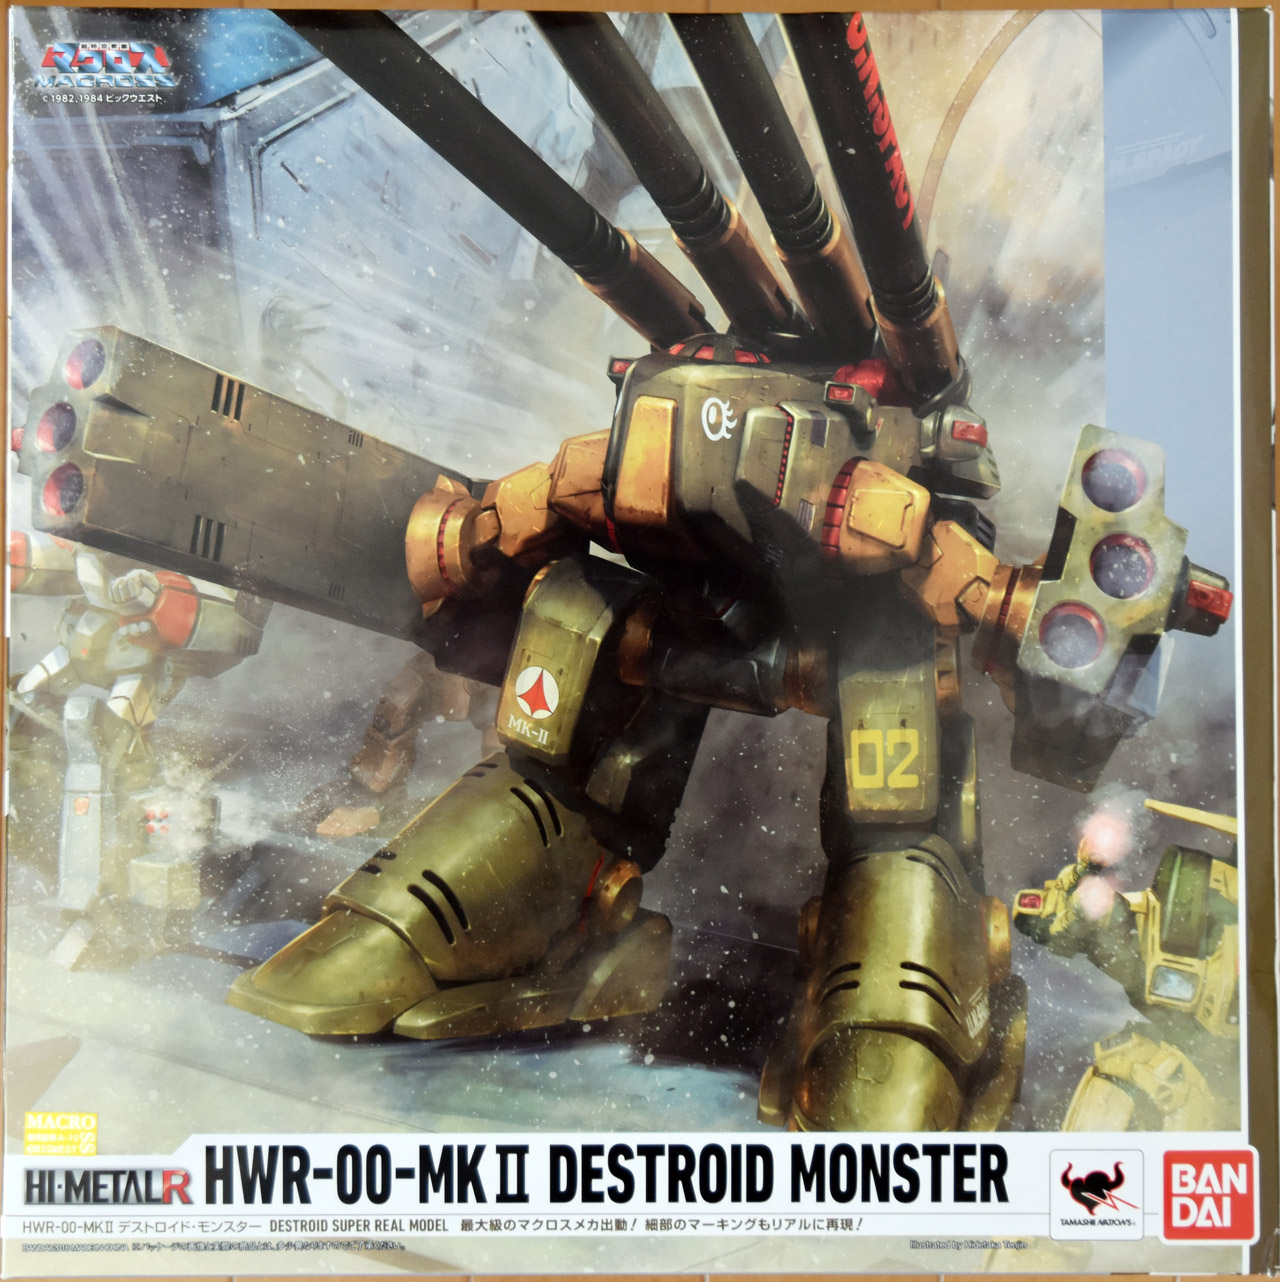 HI-METAL R HWR-00-MKII Destroid Monster by Bandai (Part 1: Unbox